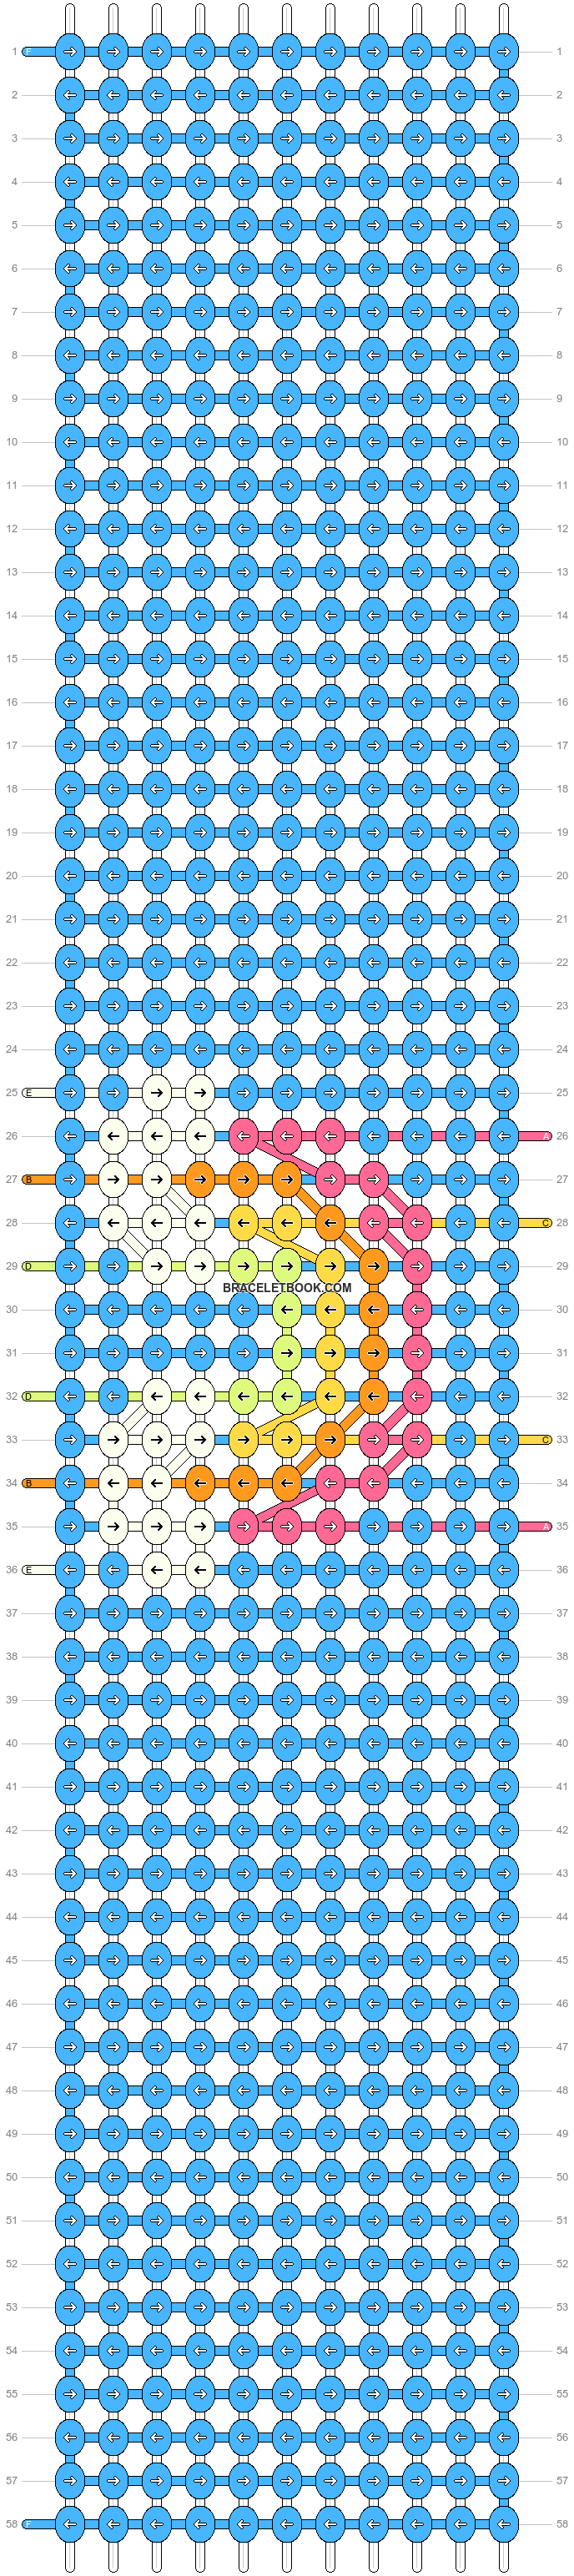 Alpha pattern #65325 variation #120846 pattern